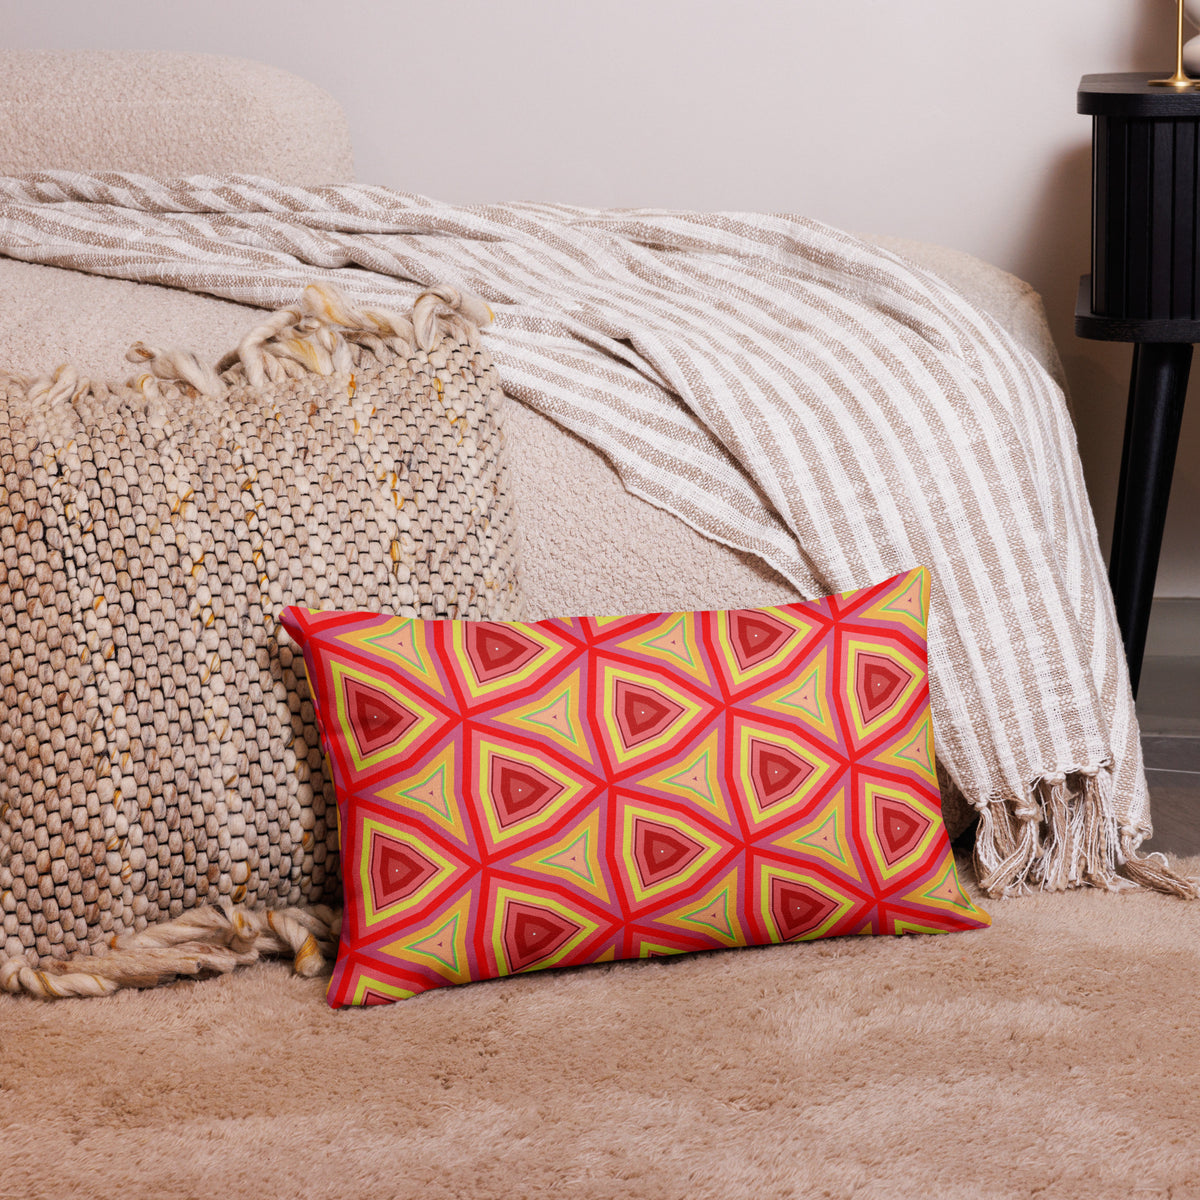 Vibrant floral design on premium accent pillow for elegant home decor.